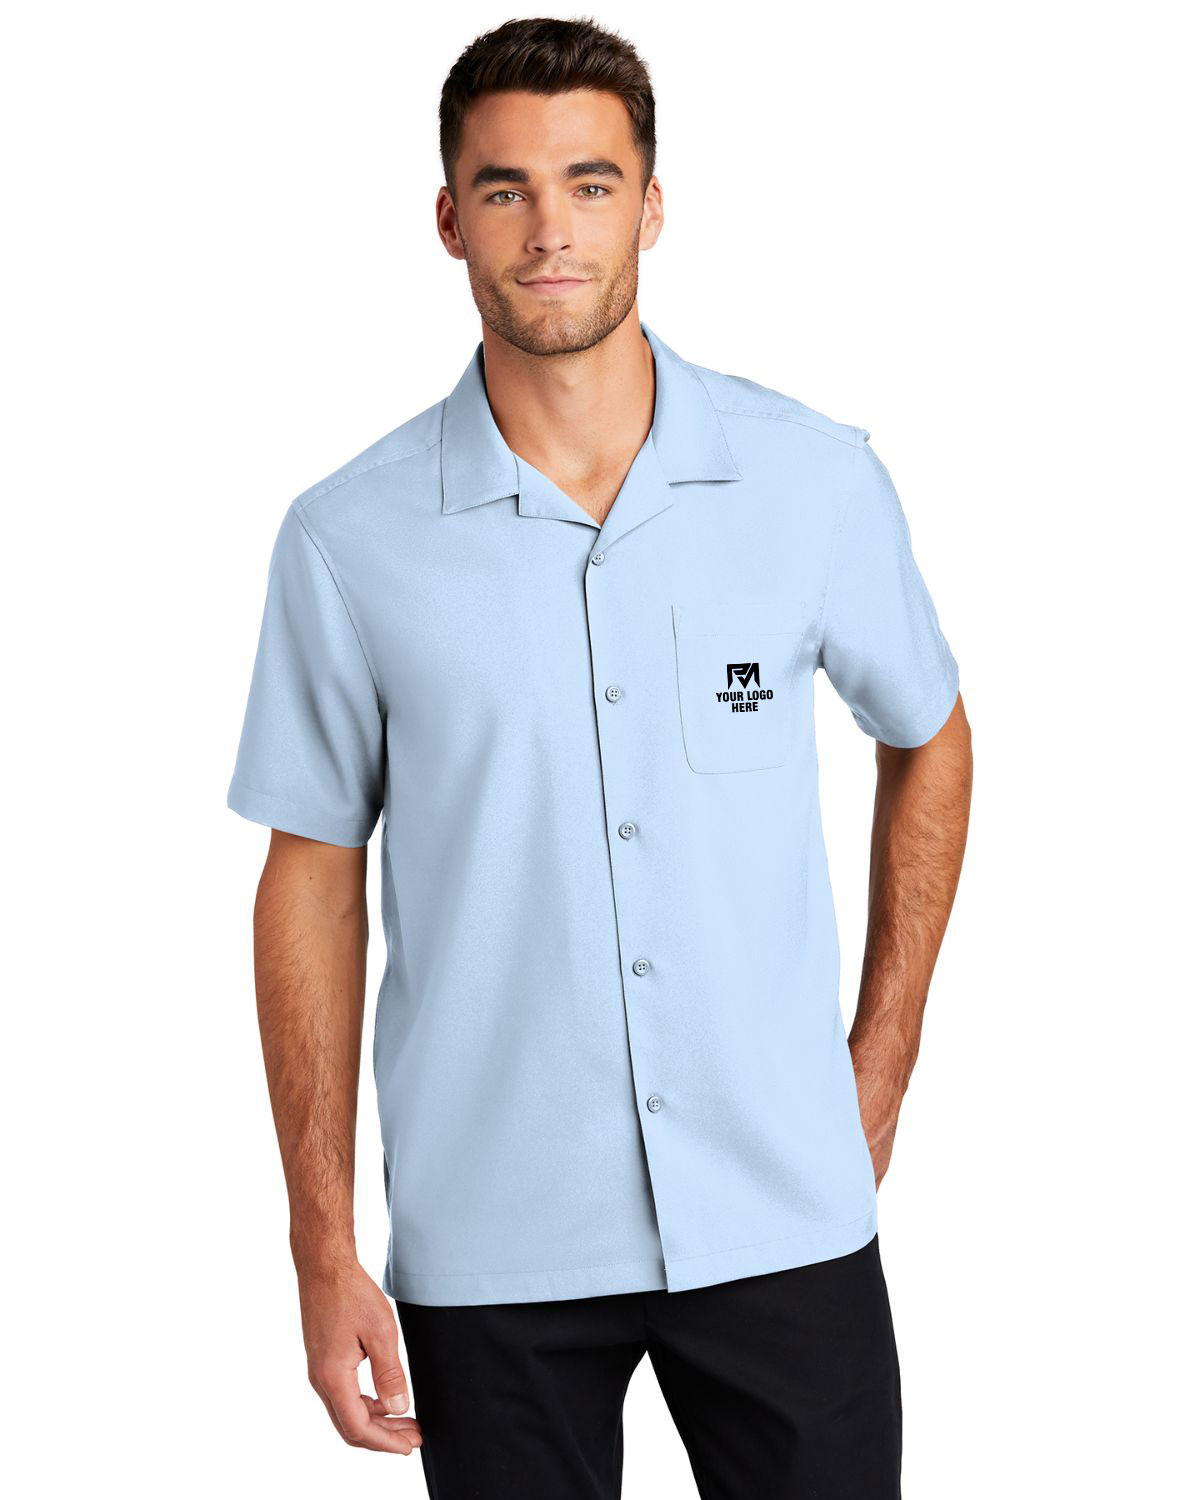 Port Authority W400 Short Sleeve Performance Staff Shirt